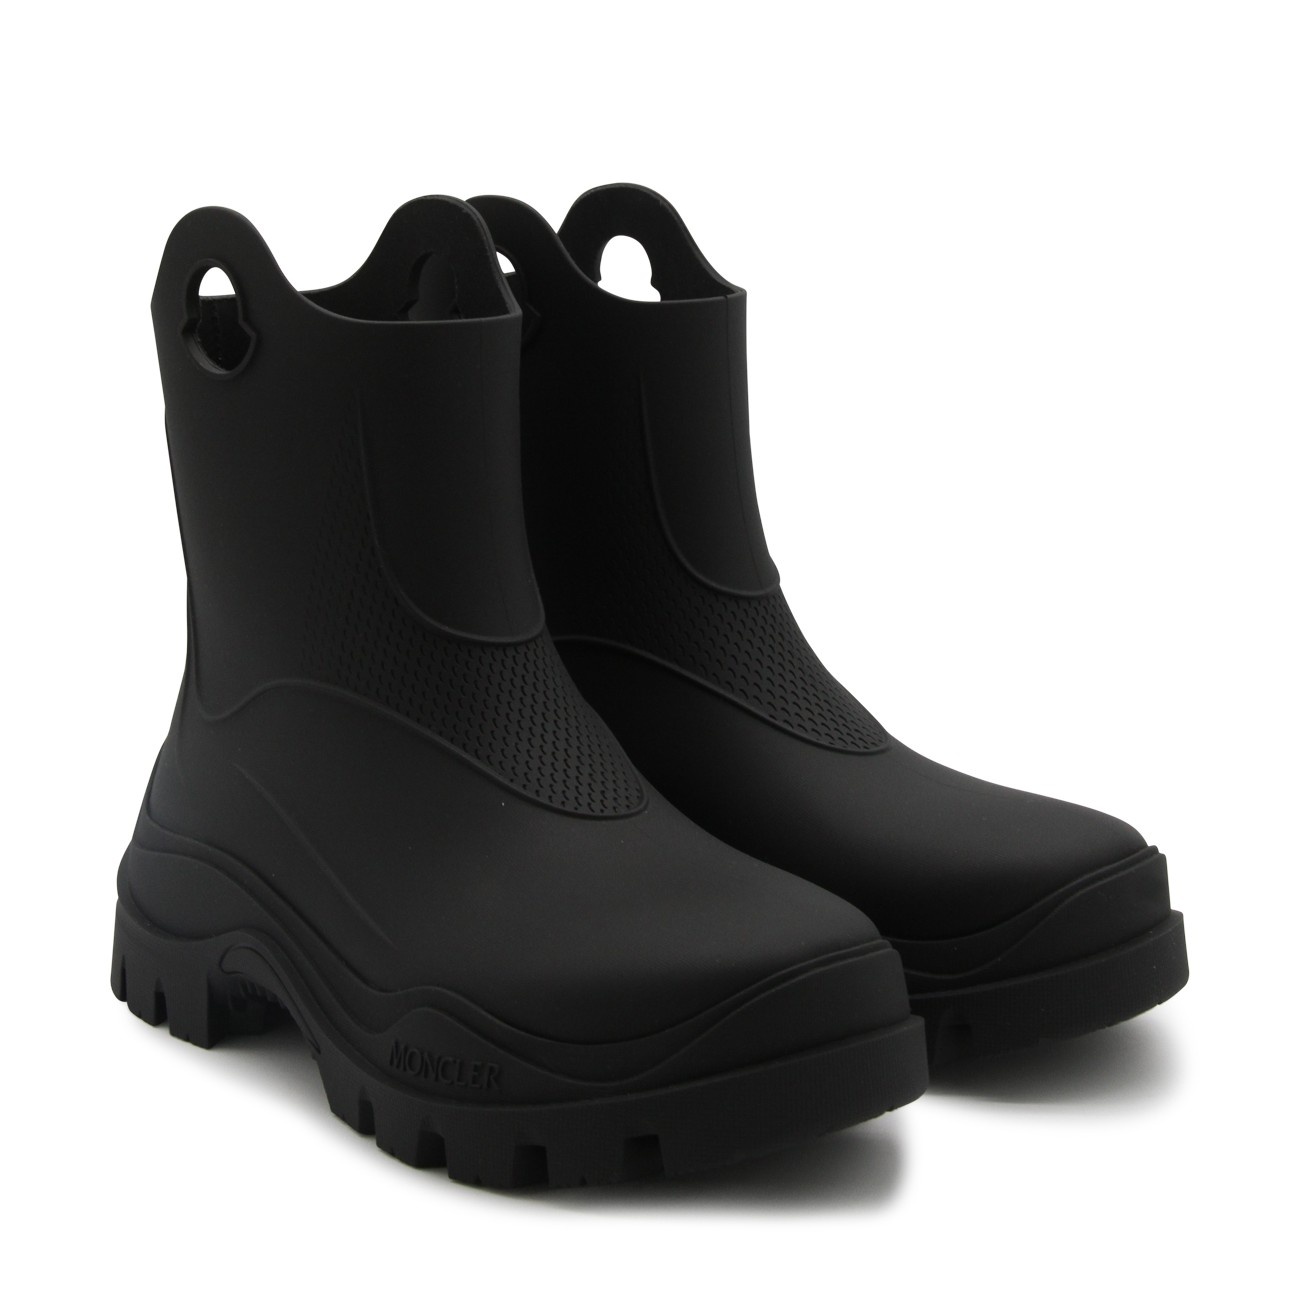 black rainy boots - 2